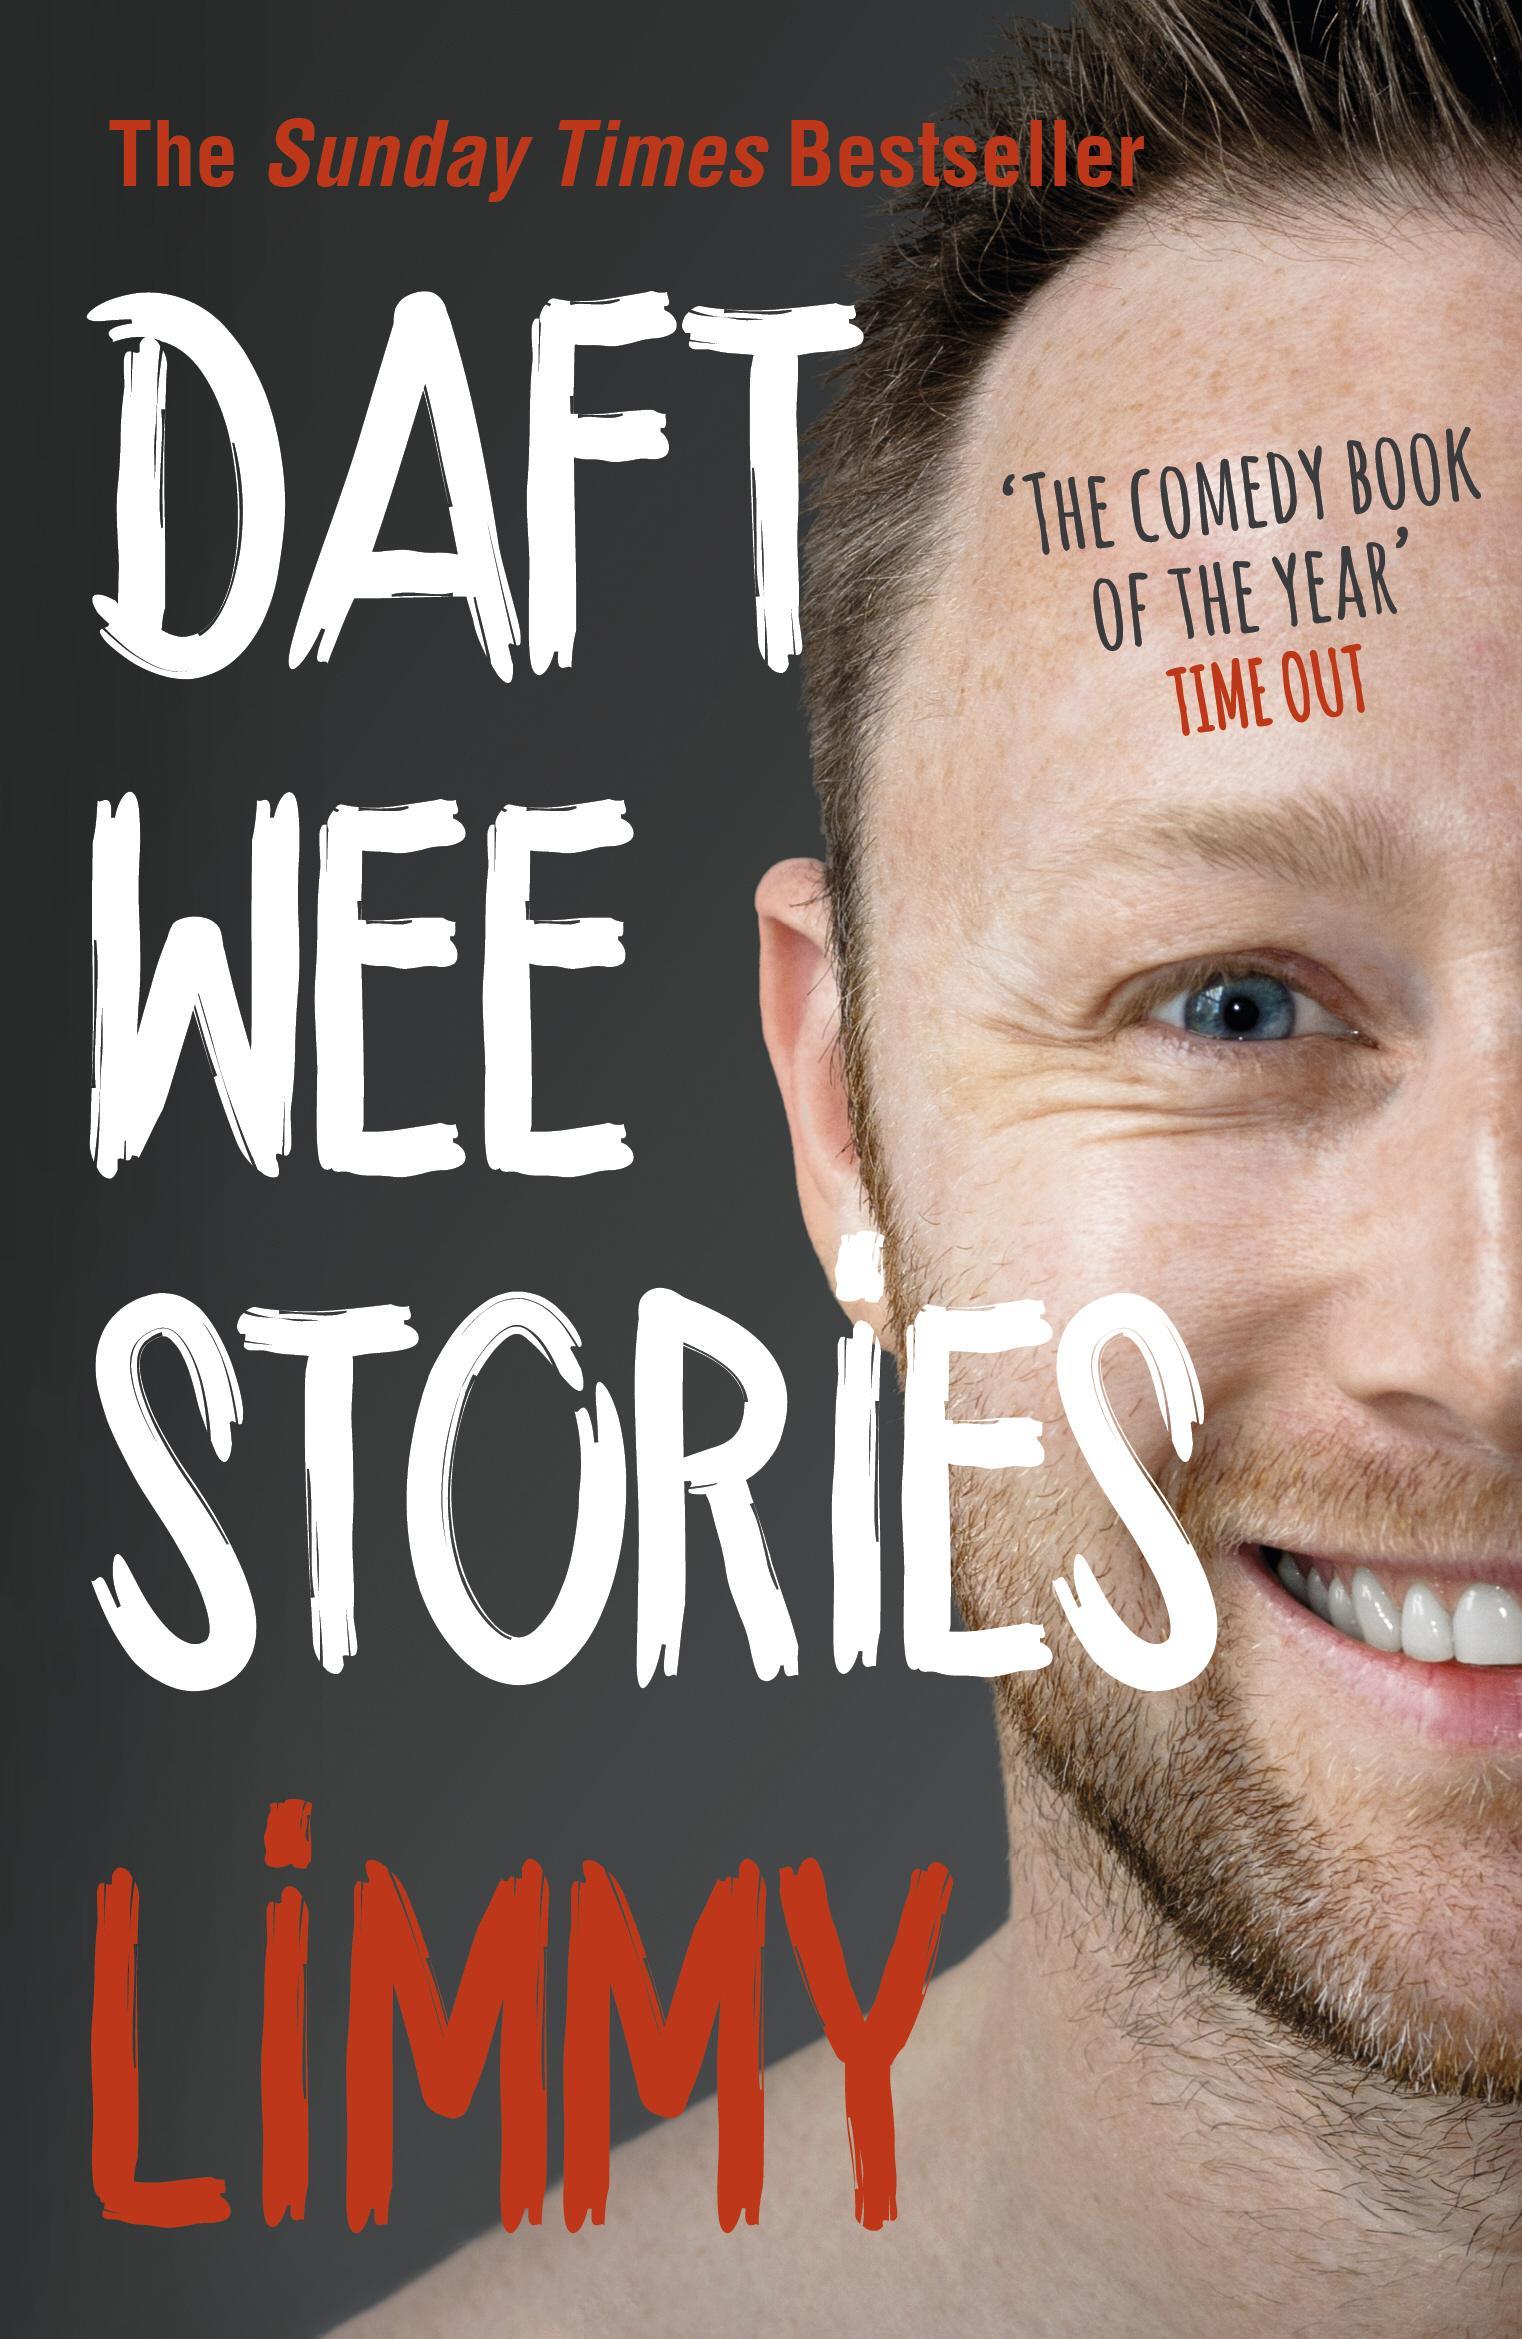 Daft Wee Stories - Limmy 